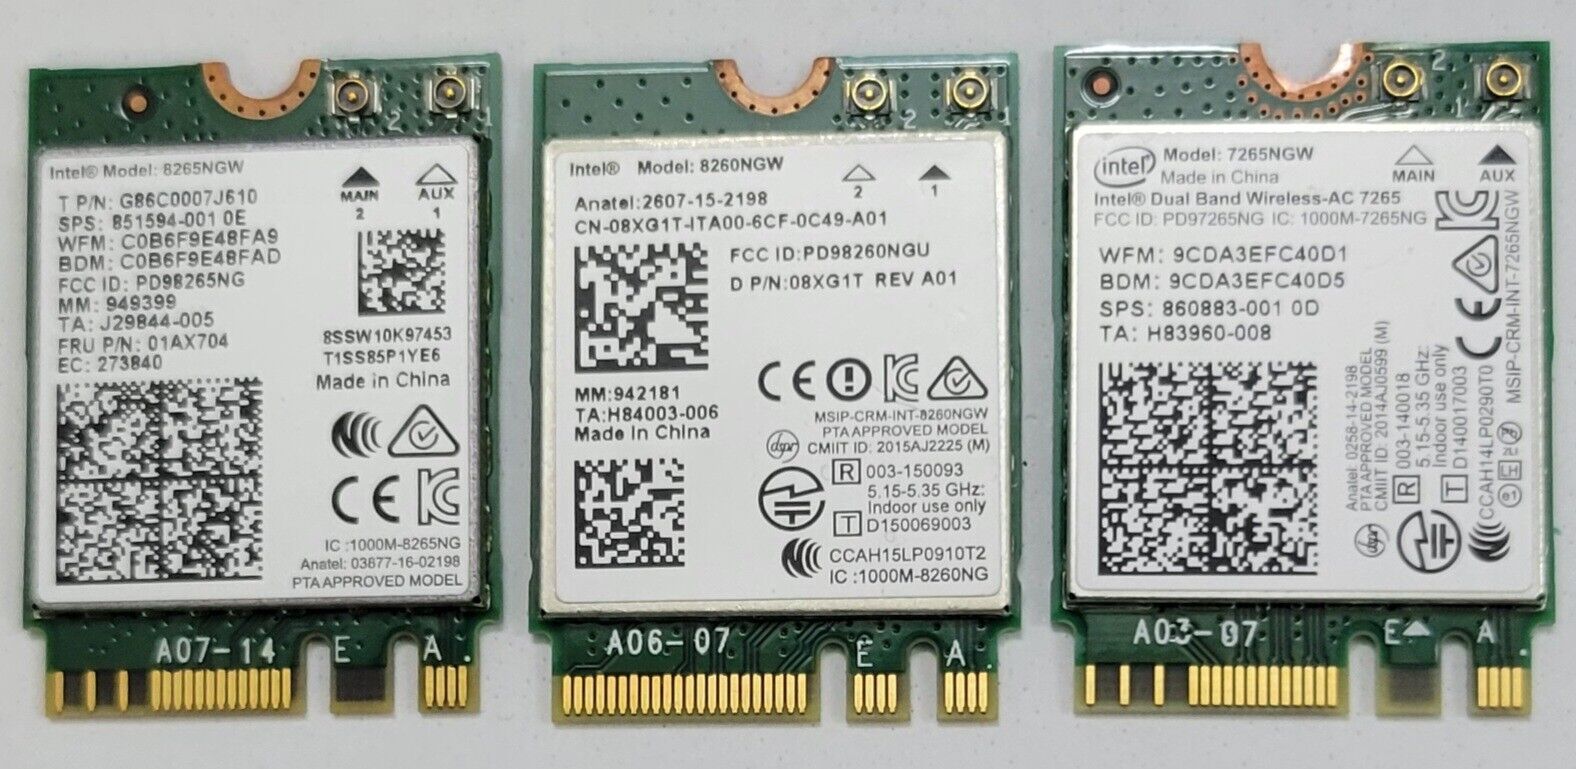 Intel 8265NGW, Intel 8060NGW, Intel 7256NGW Blue Tooth Dual Band WiFi Cards